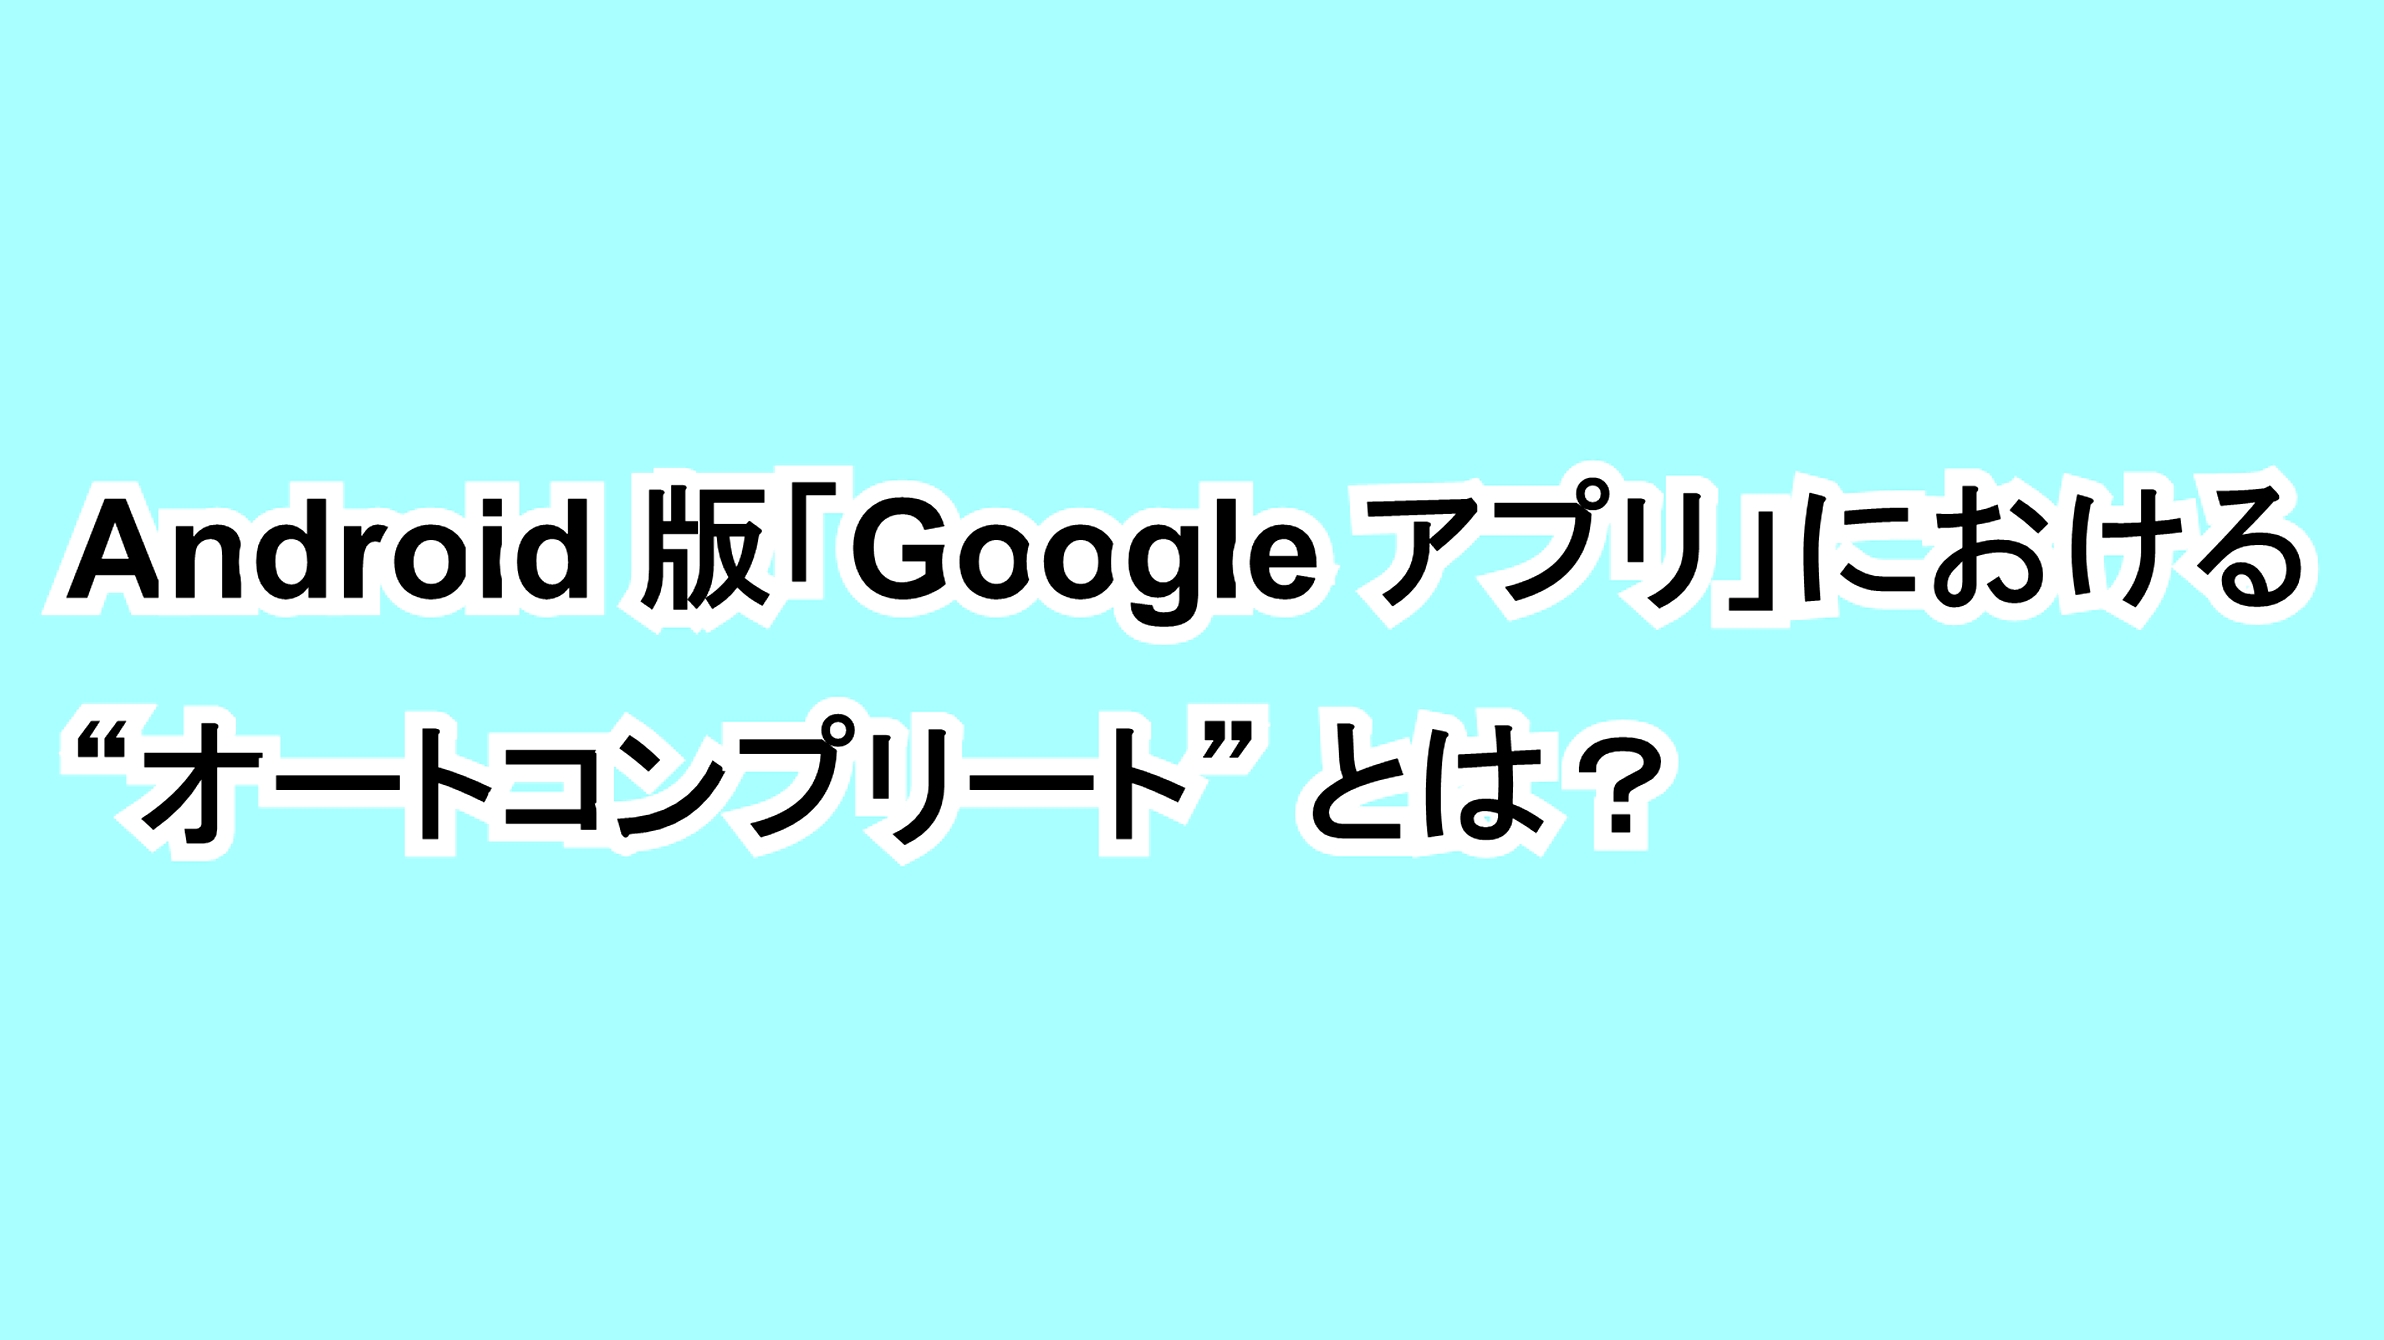 Android版「Google アプリ」における“オートコンプリート”とは？